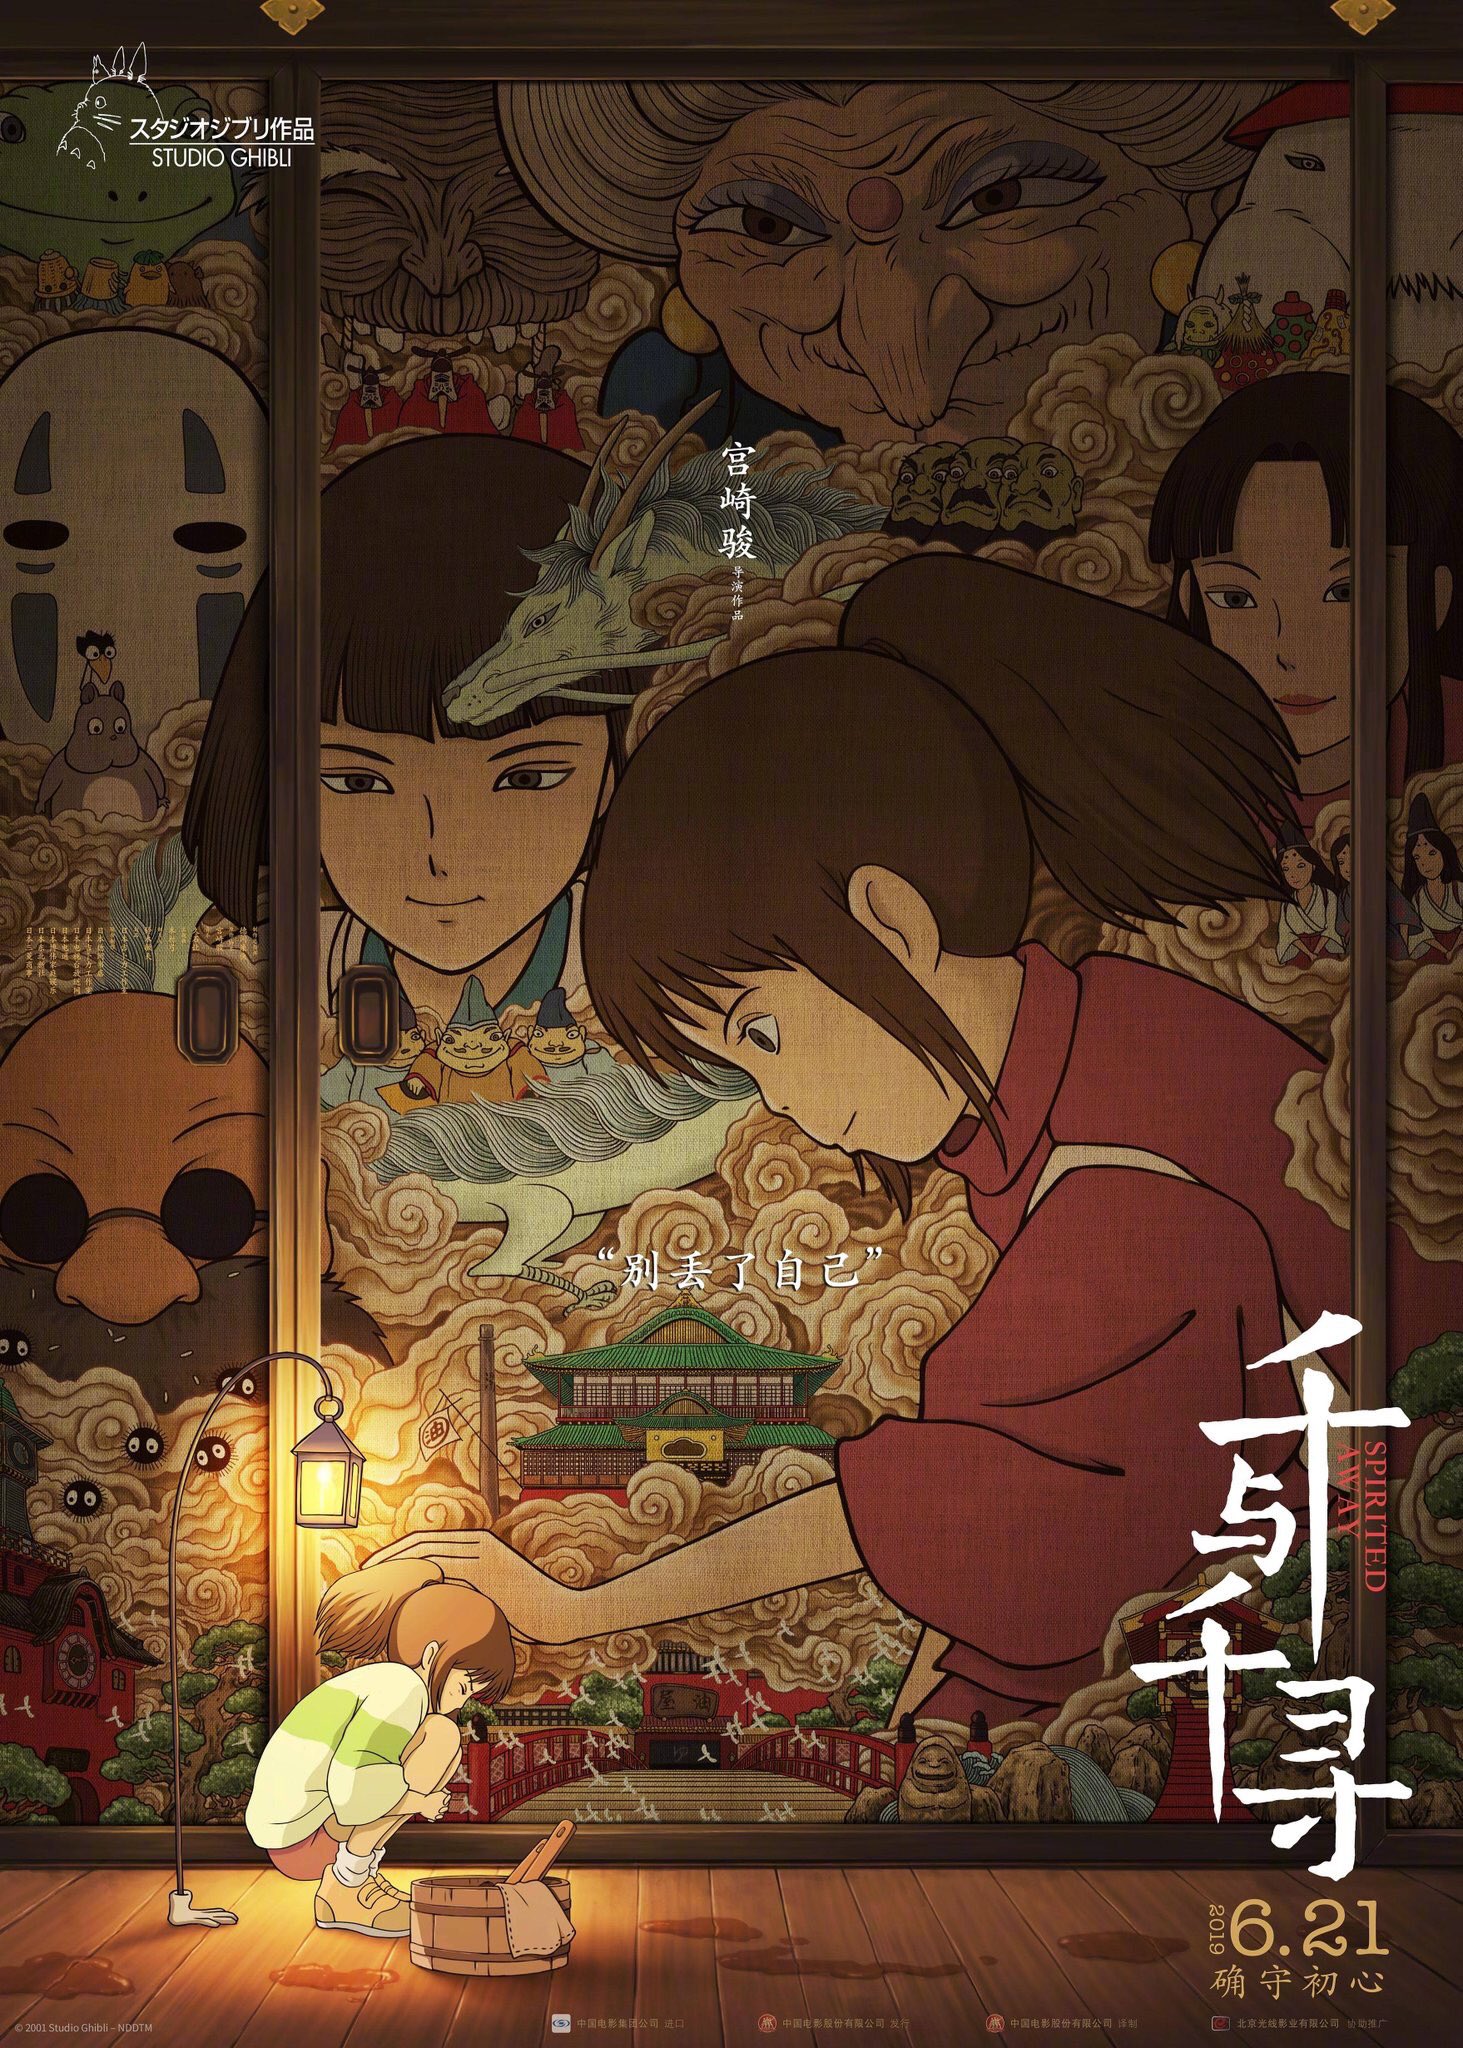 Diz 6月21日に中国で劇場公開が決定した 千と千尋の神隠し のポスターがとても美しい T Co Vfabsnz8oj Twitter